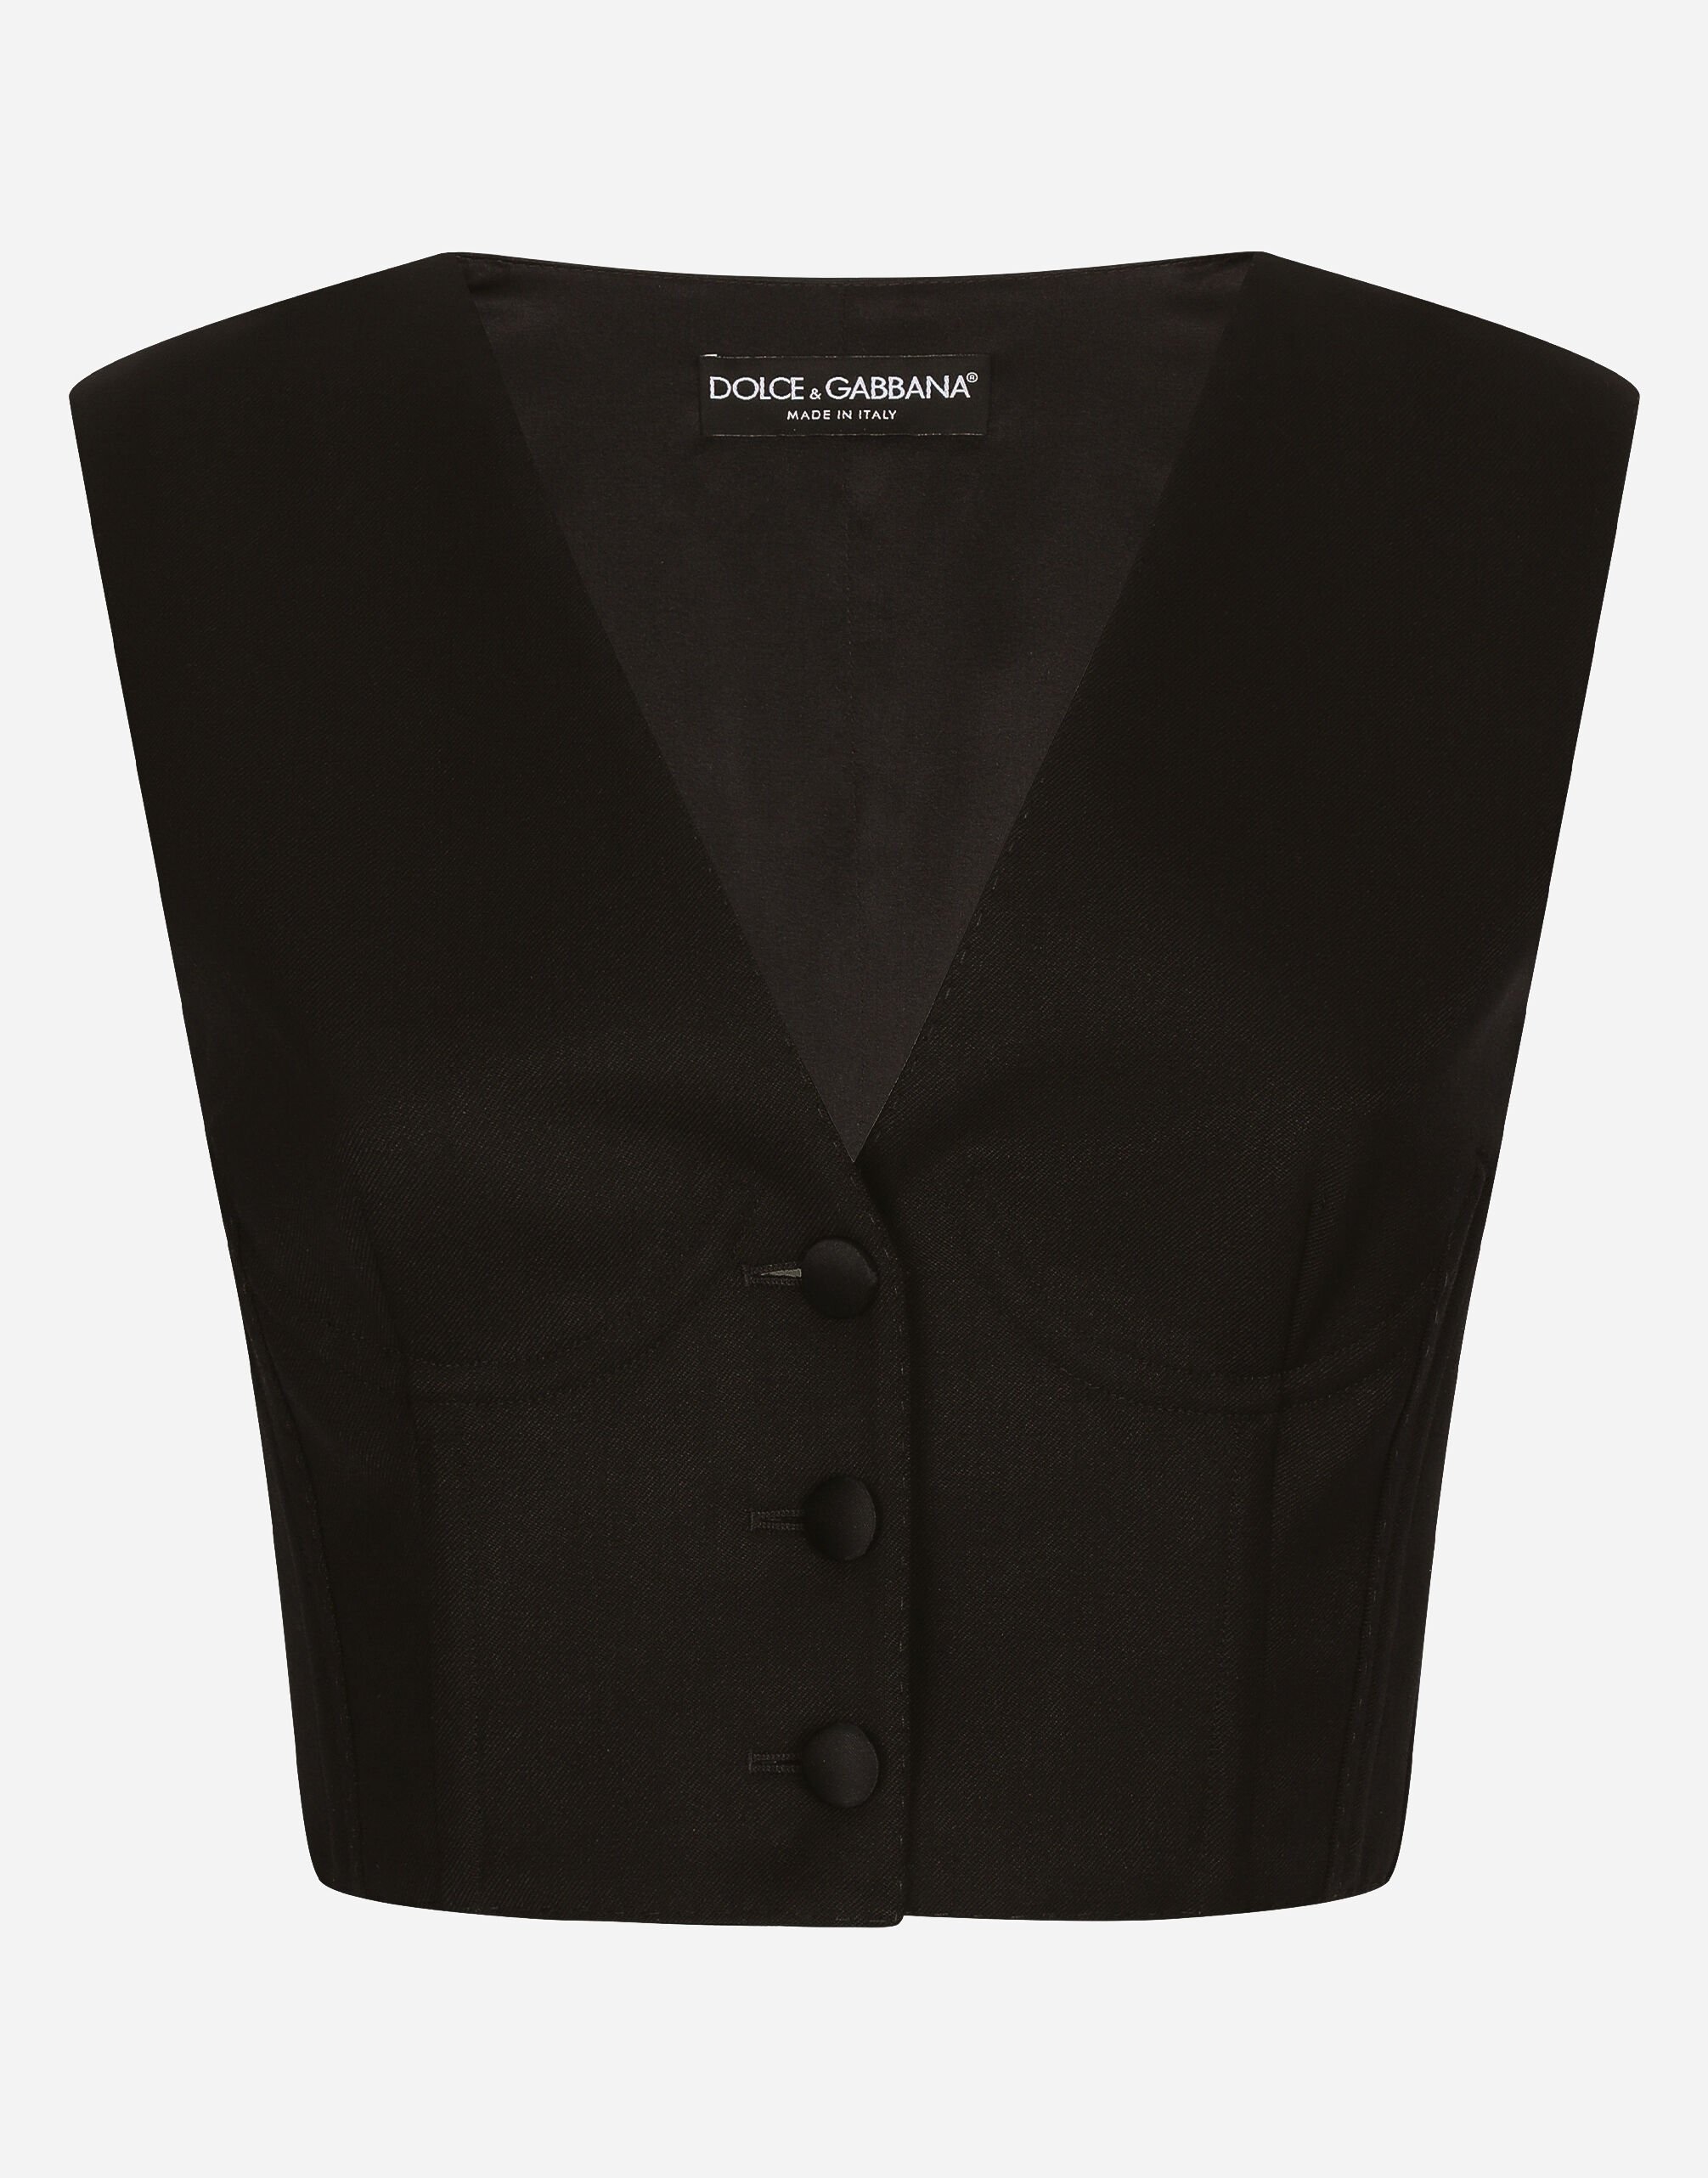 Dolce & Gabbana Chaleco corto de cady con detalles corseteros Estampado F6ZT1THS5Q2